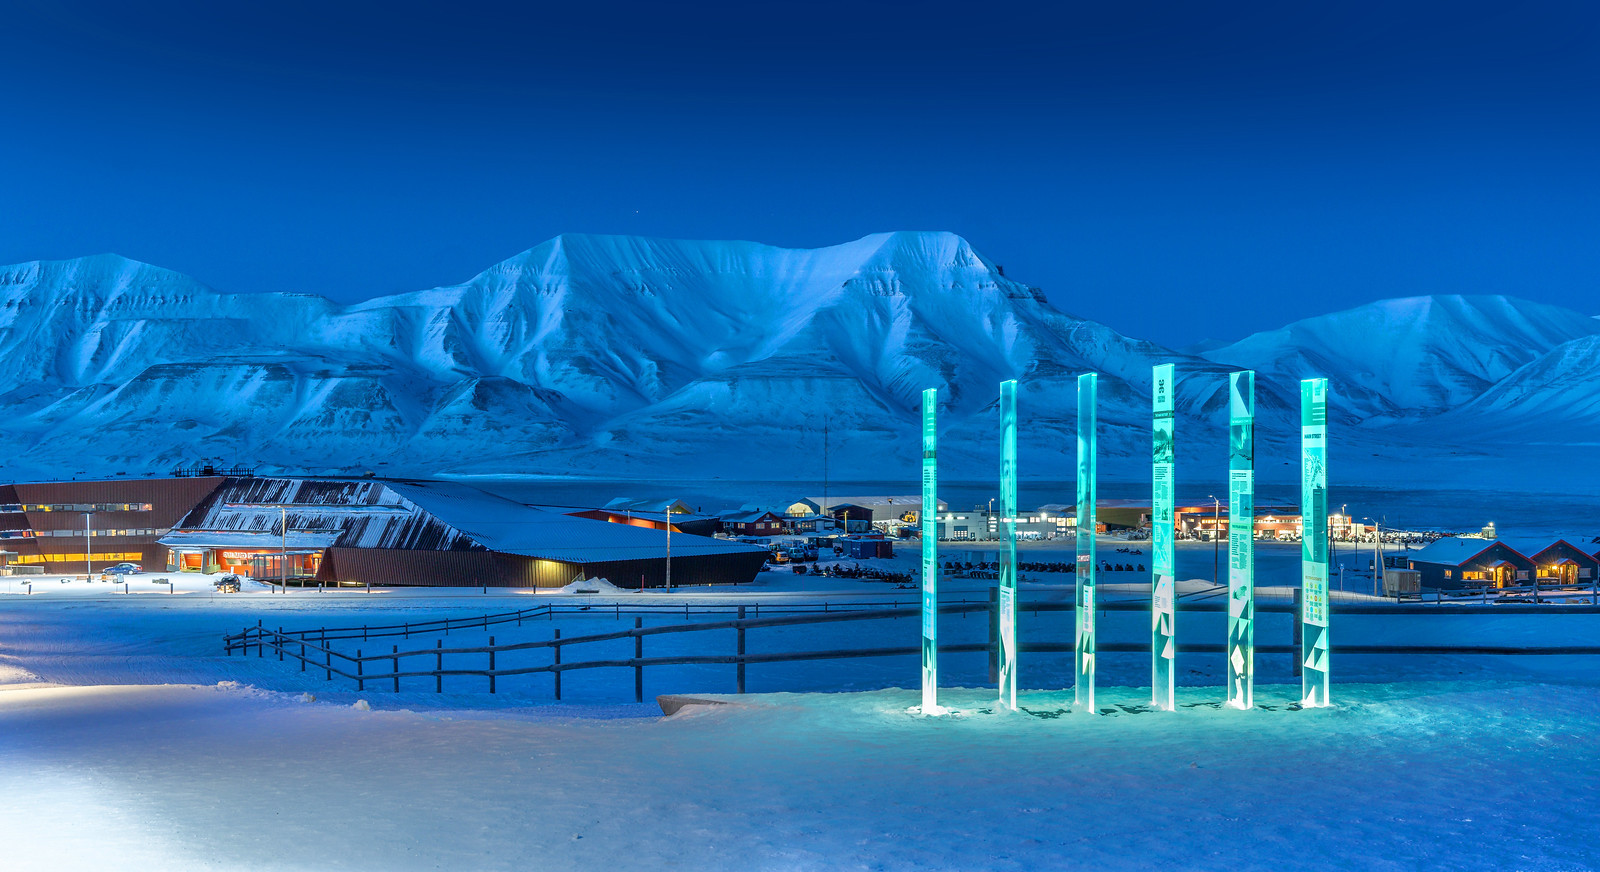 JW/LB5MG Longyearbyen, Svalbard